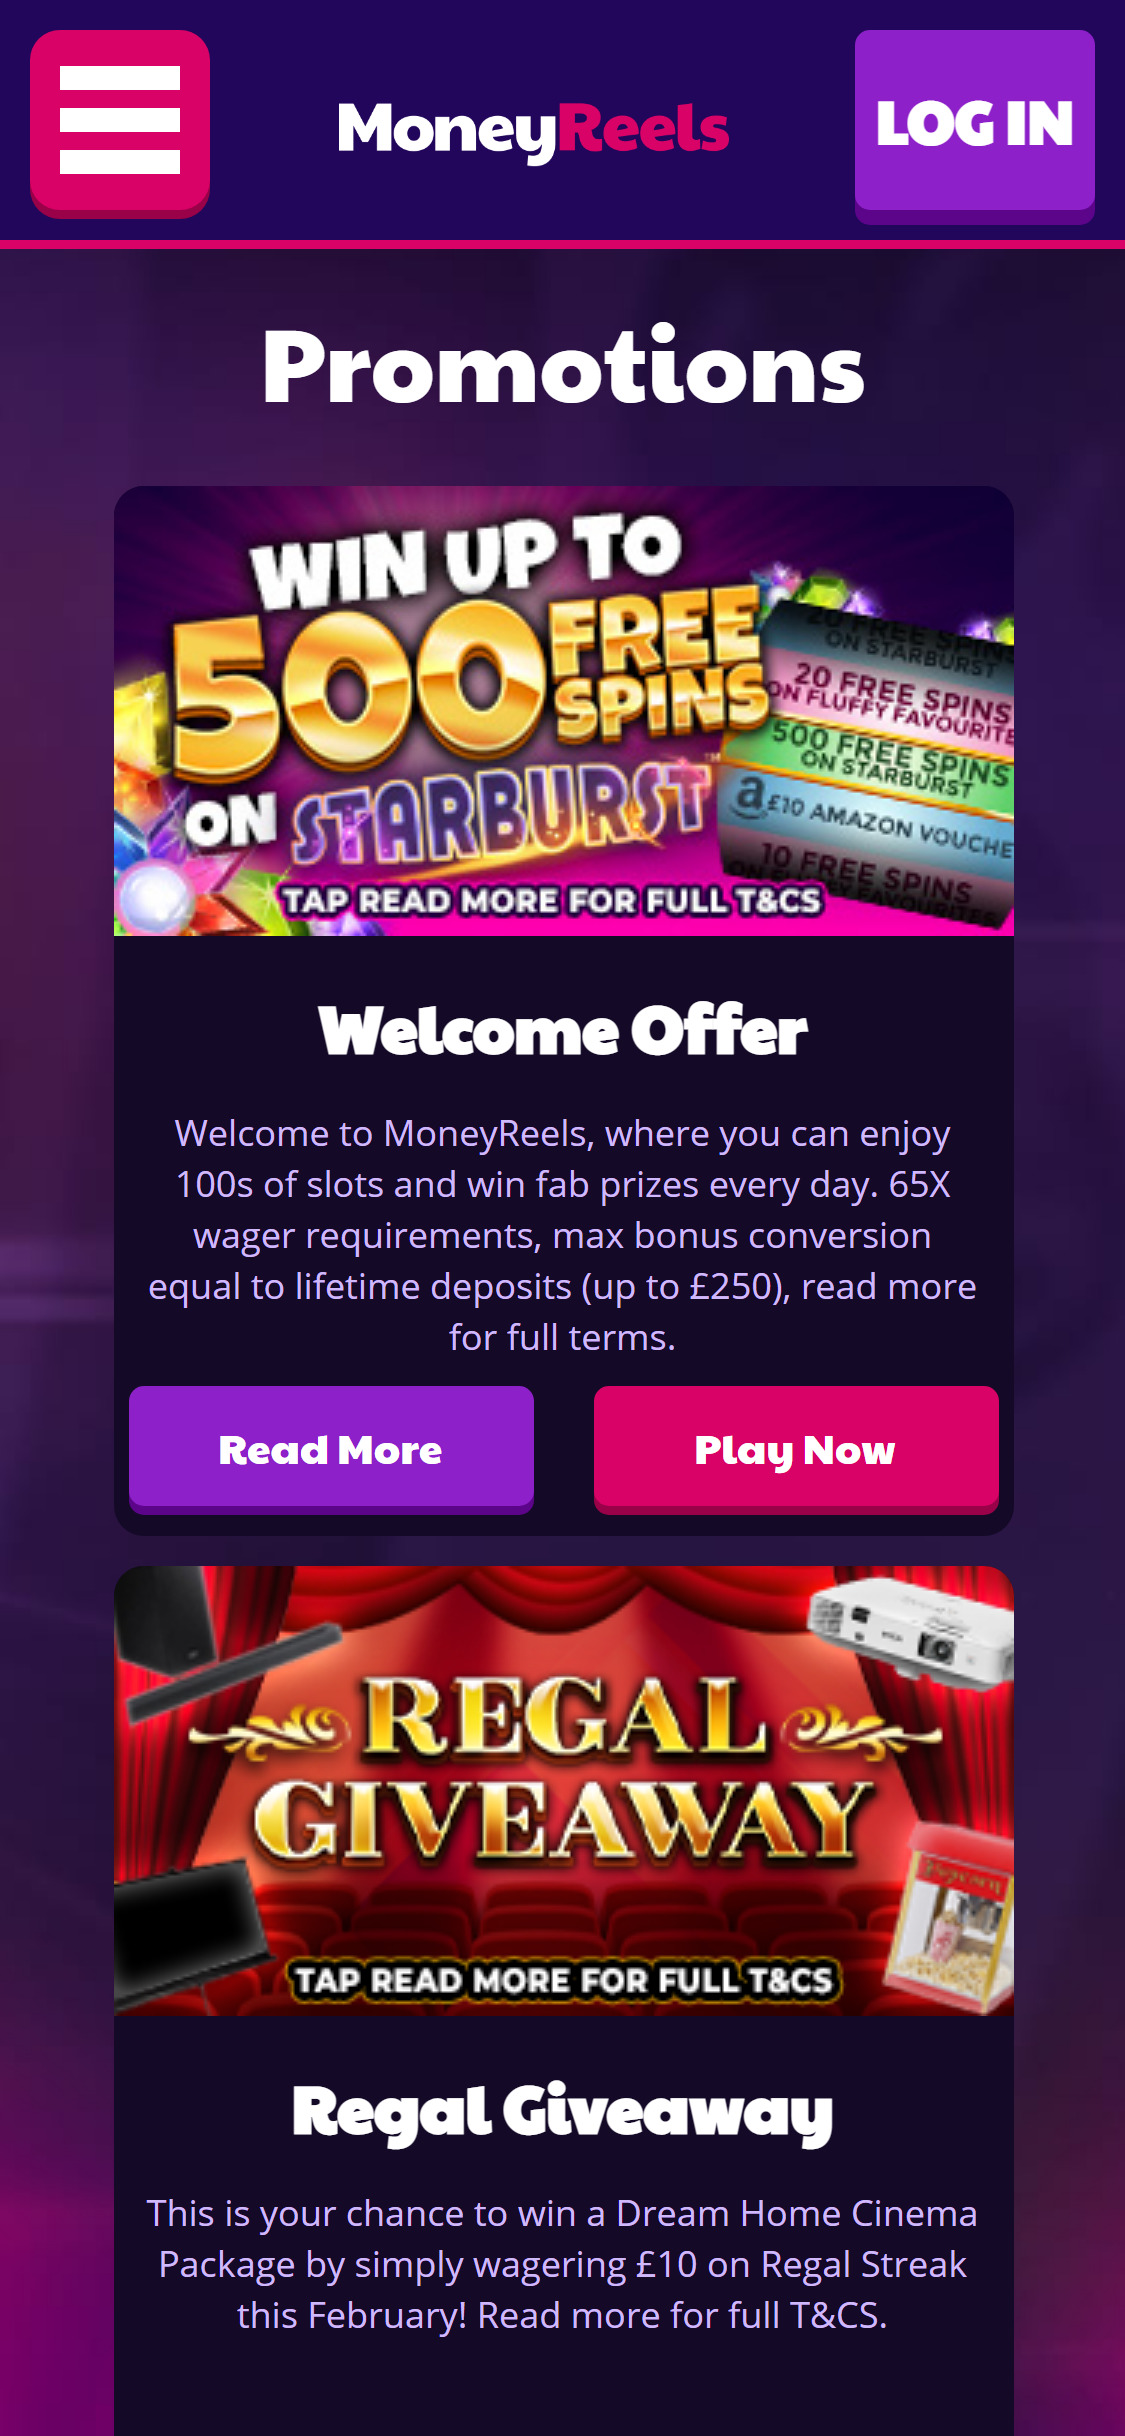 Money Reels Casino Mobile No Deposit Bonus Review